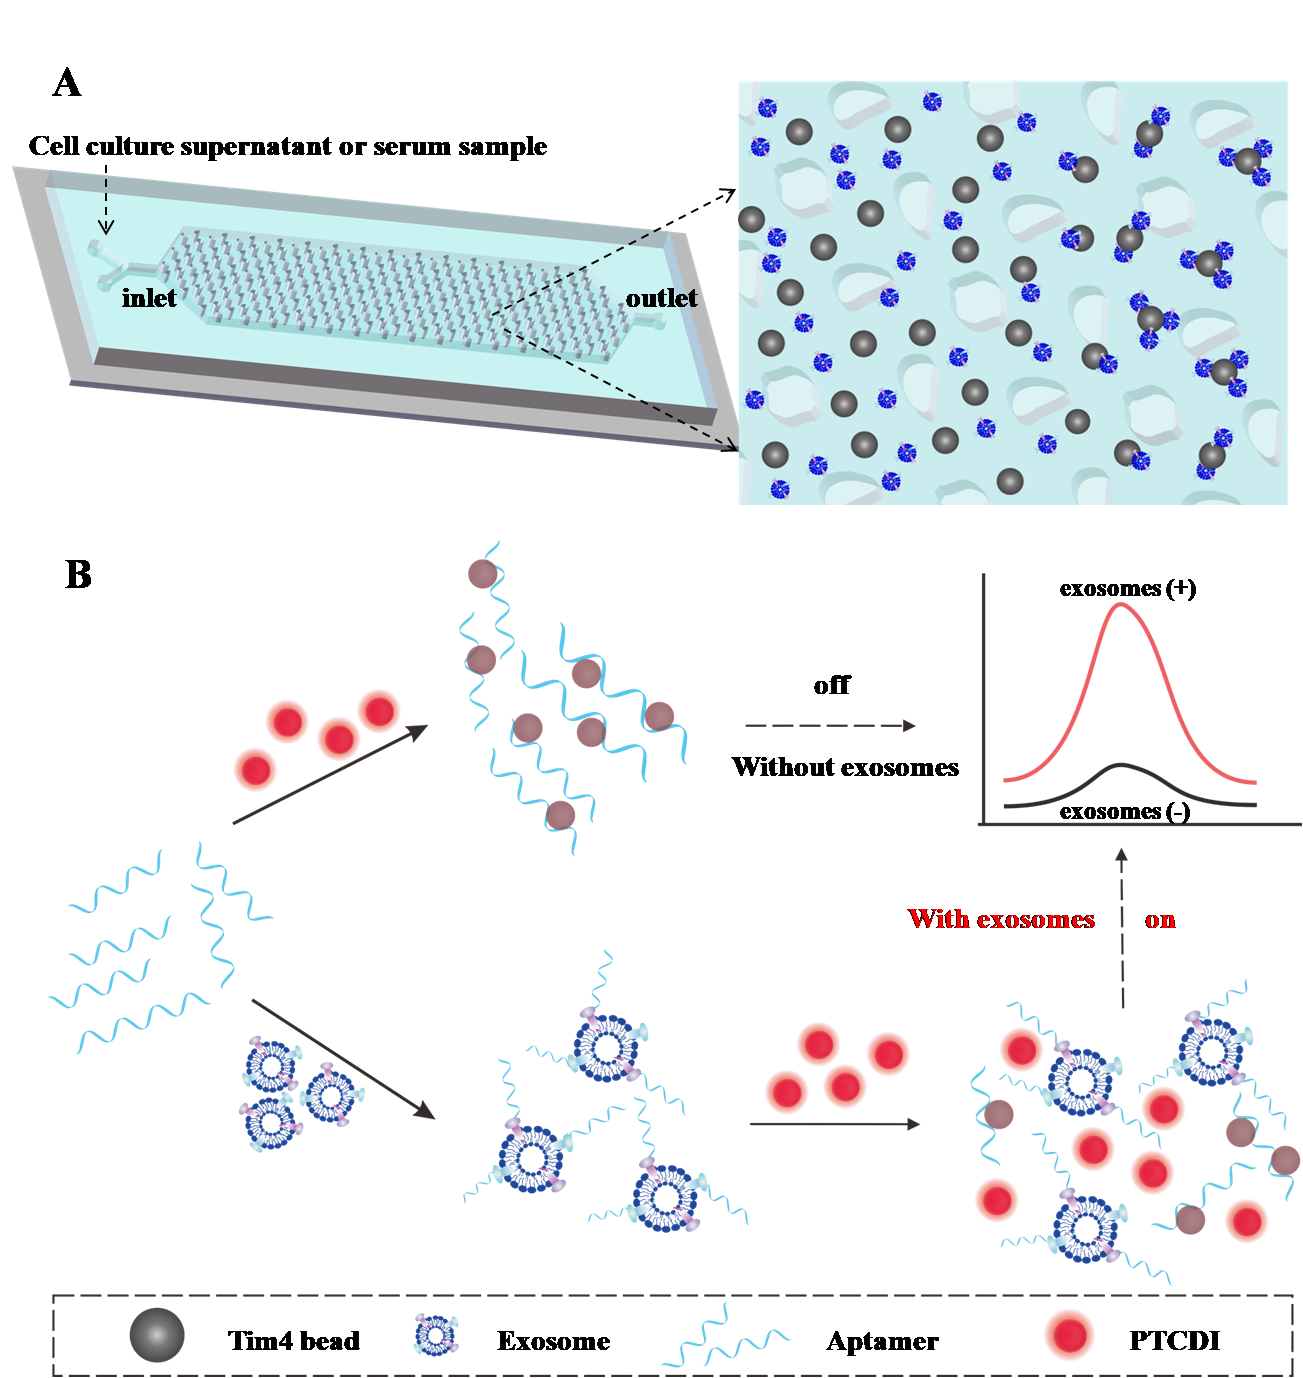 Anal. Chem. | 华东理工大学叶邦策教授团队：一种用于外泌体分离富集的微流控芯片和表面蛋白分析策略